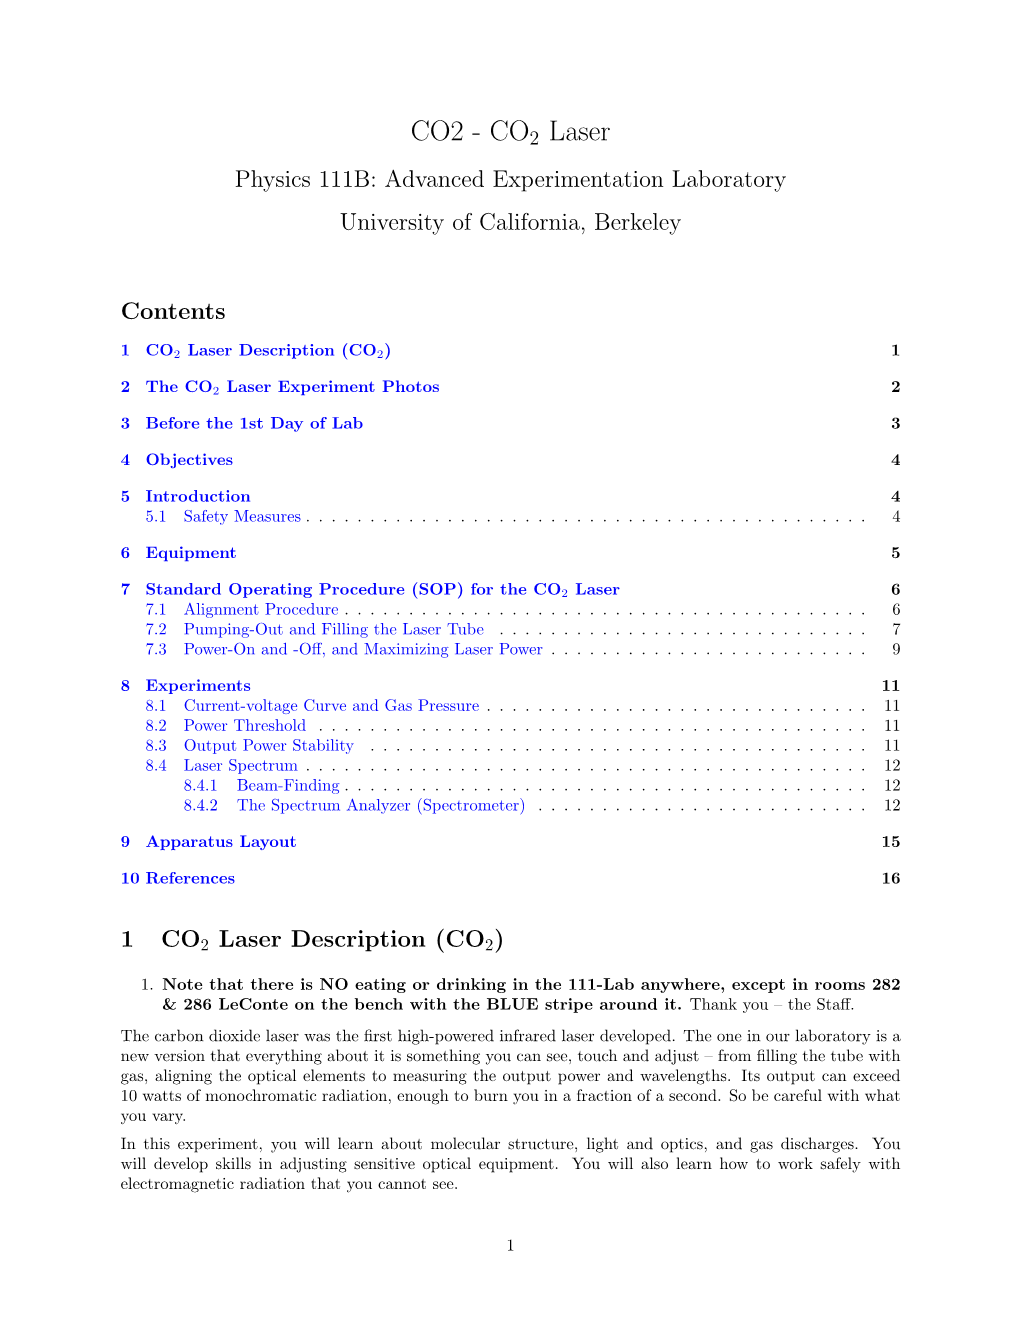 CO2 - CO2 Laser Physics 111B: Advanced Experimentation Laboratory University of California, Berkeley